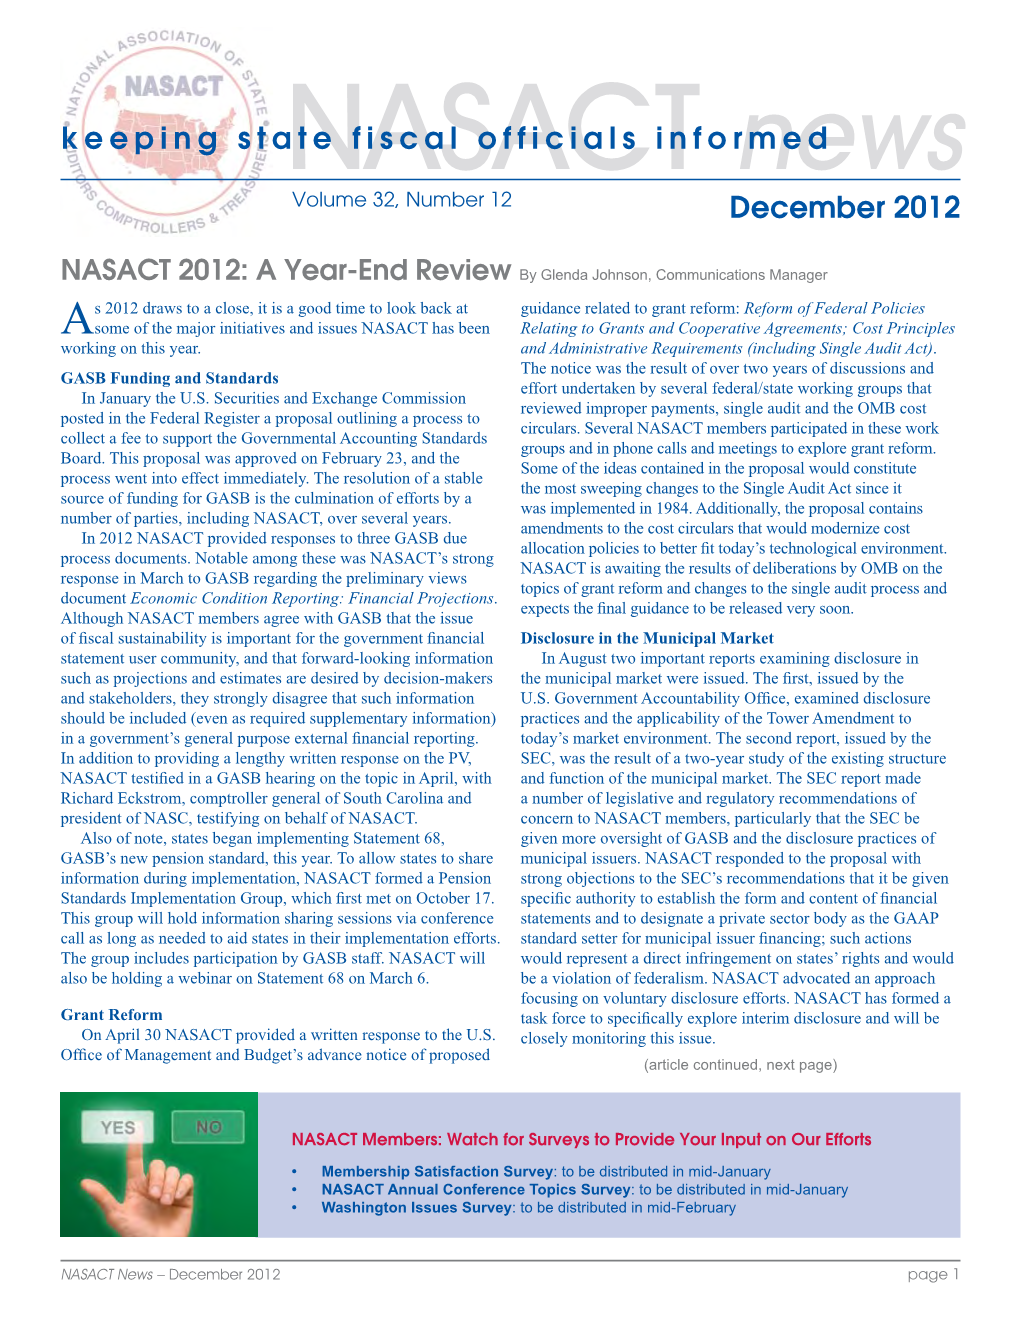 NASACT News, December 2012